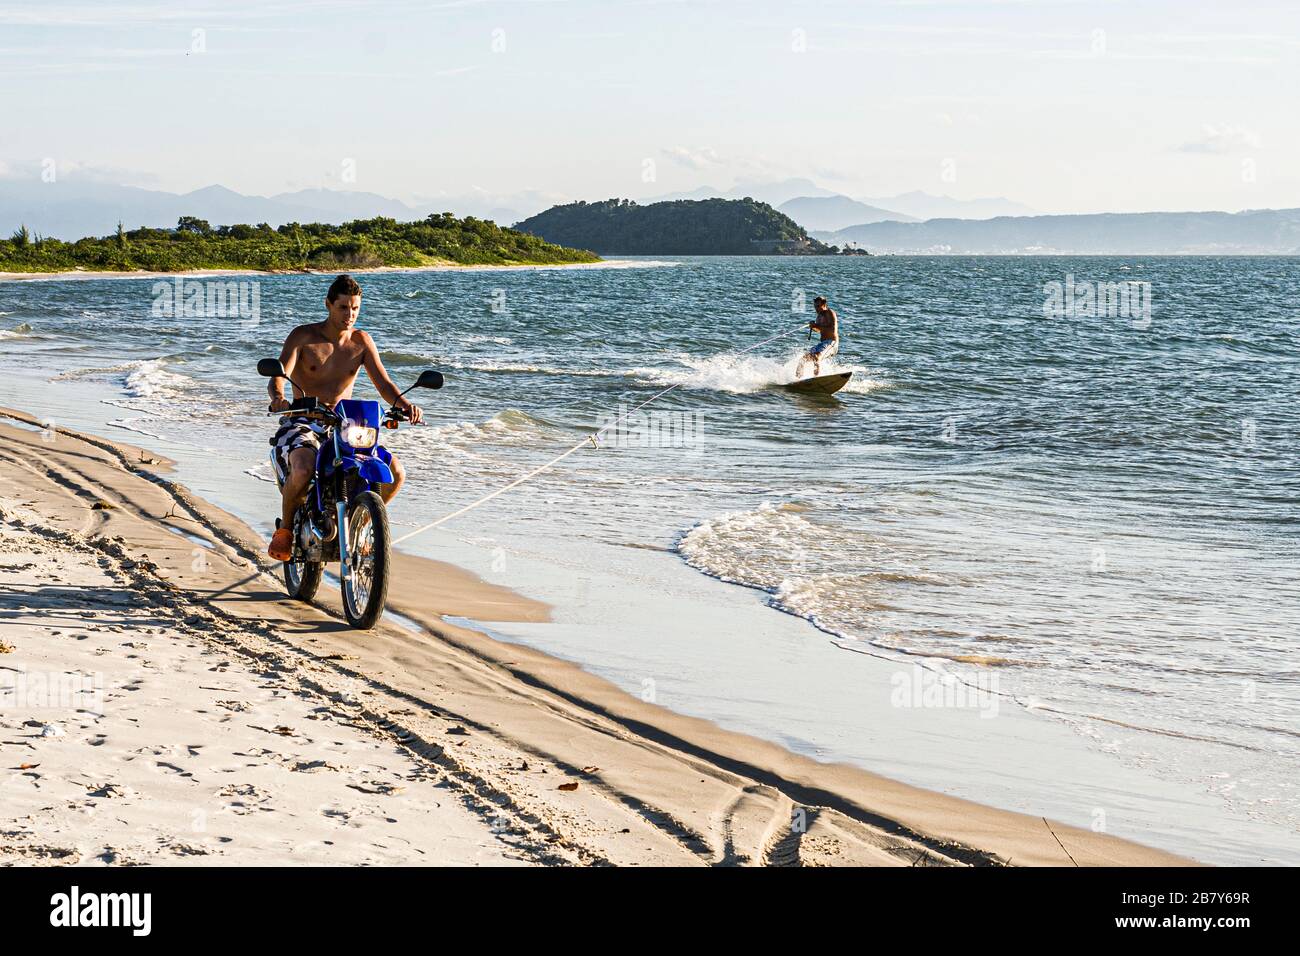 Moto trainando un surfista a Daniela Beach. Florianopolis, Santa Catarina, Brasile. Foto Stock